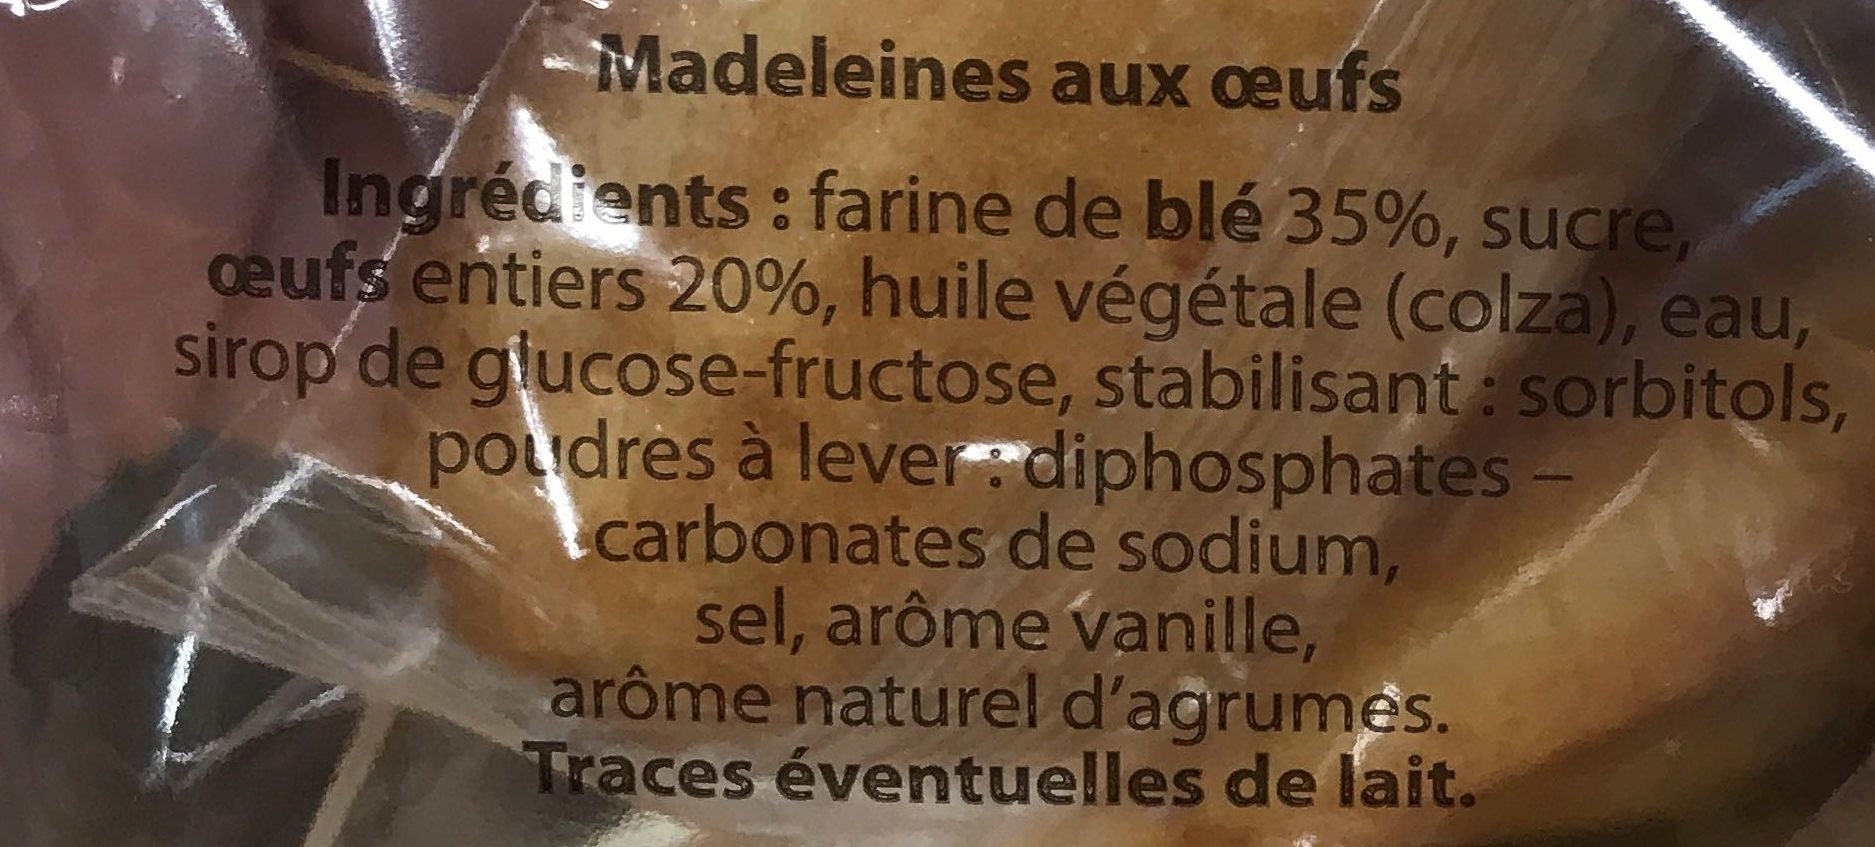 madeleines coquilles - Ingredients - fr